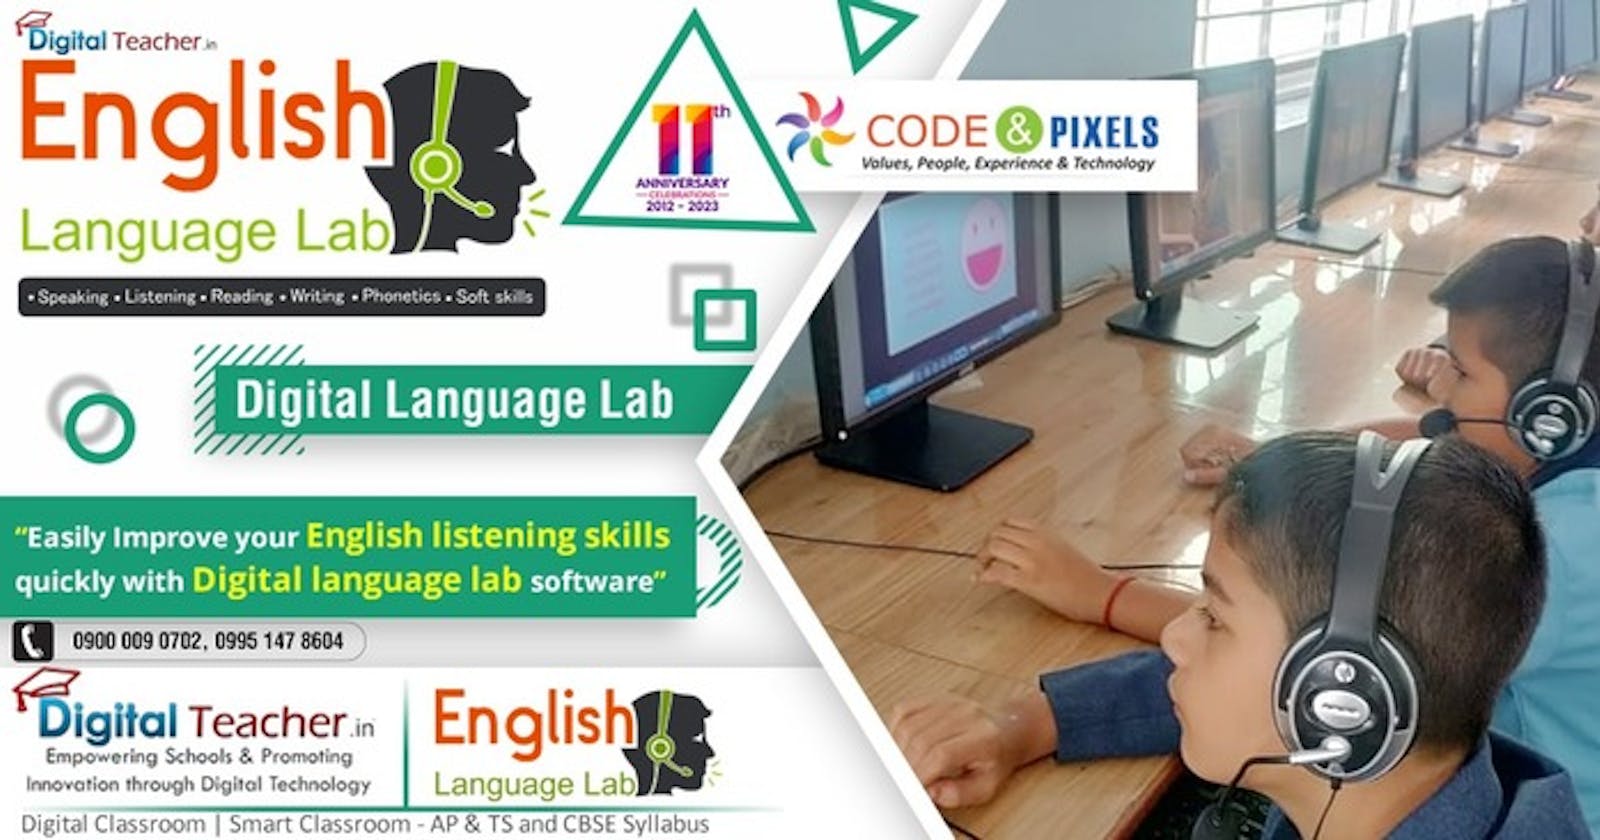 English Language Lab Digital Language Lab for Teachers/Students